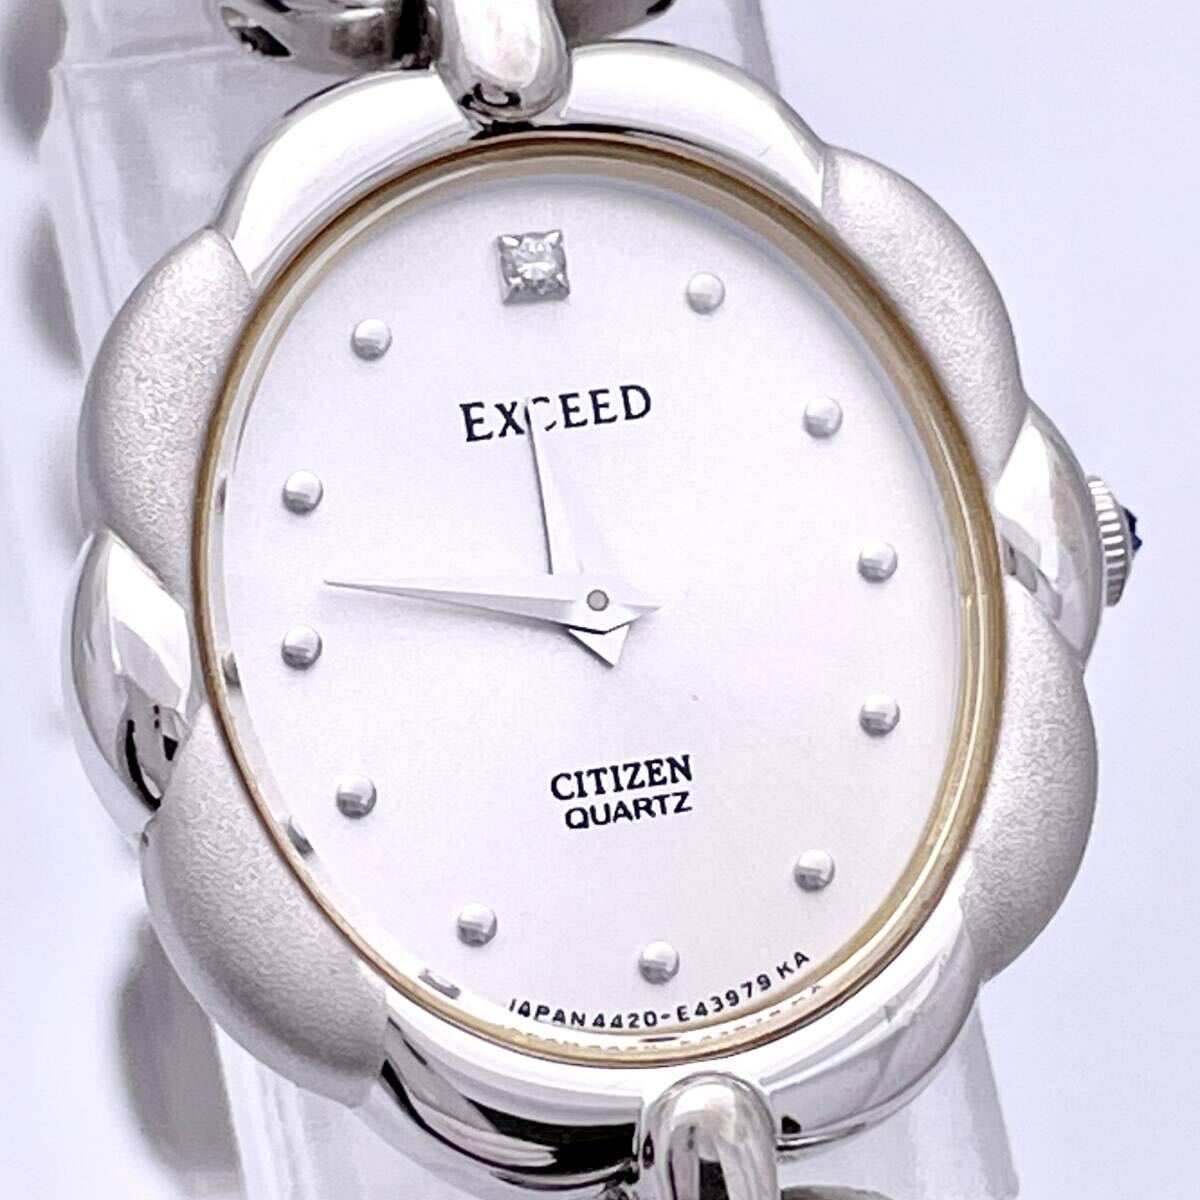 CITIZEN シチズン EXCEED エクシード 4420-E42193 腕時計 ウォッチ クォーツ quartz シルバー文字盤 銀 シルバー P159の画像4